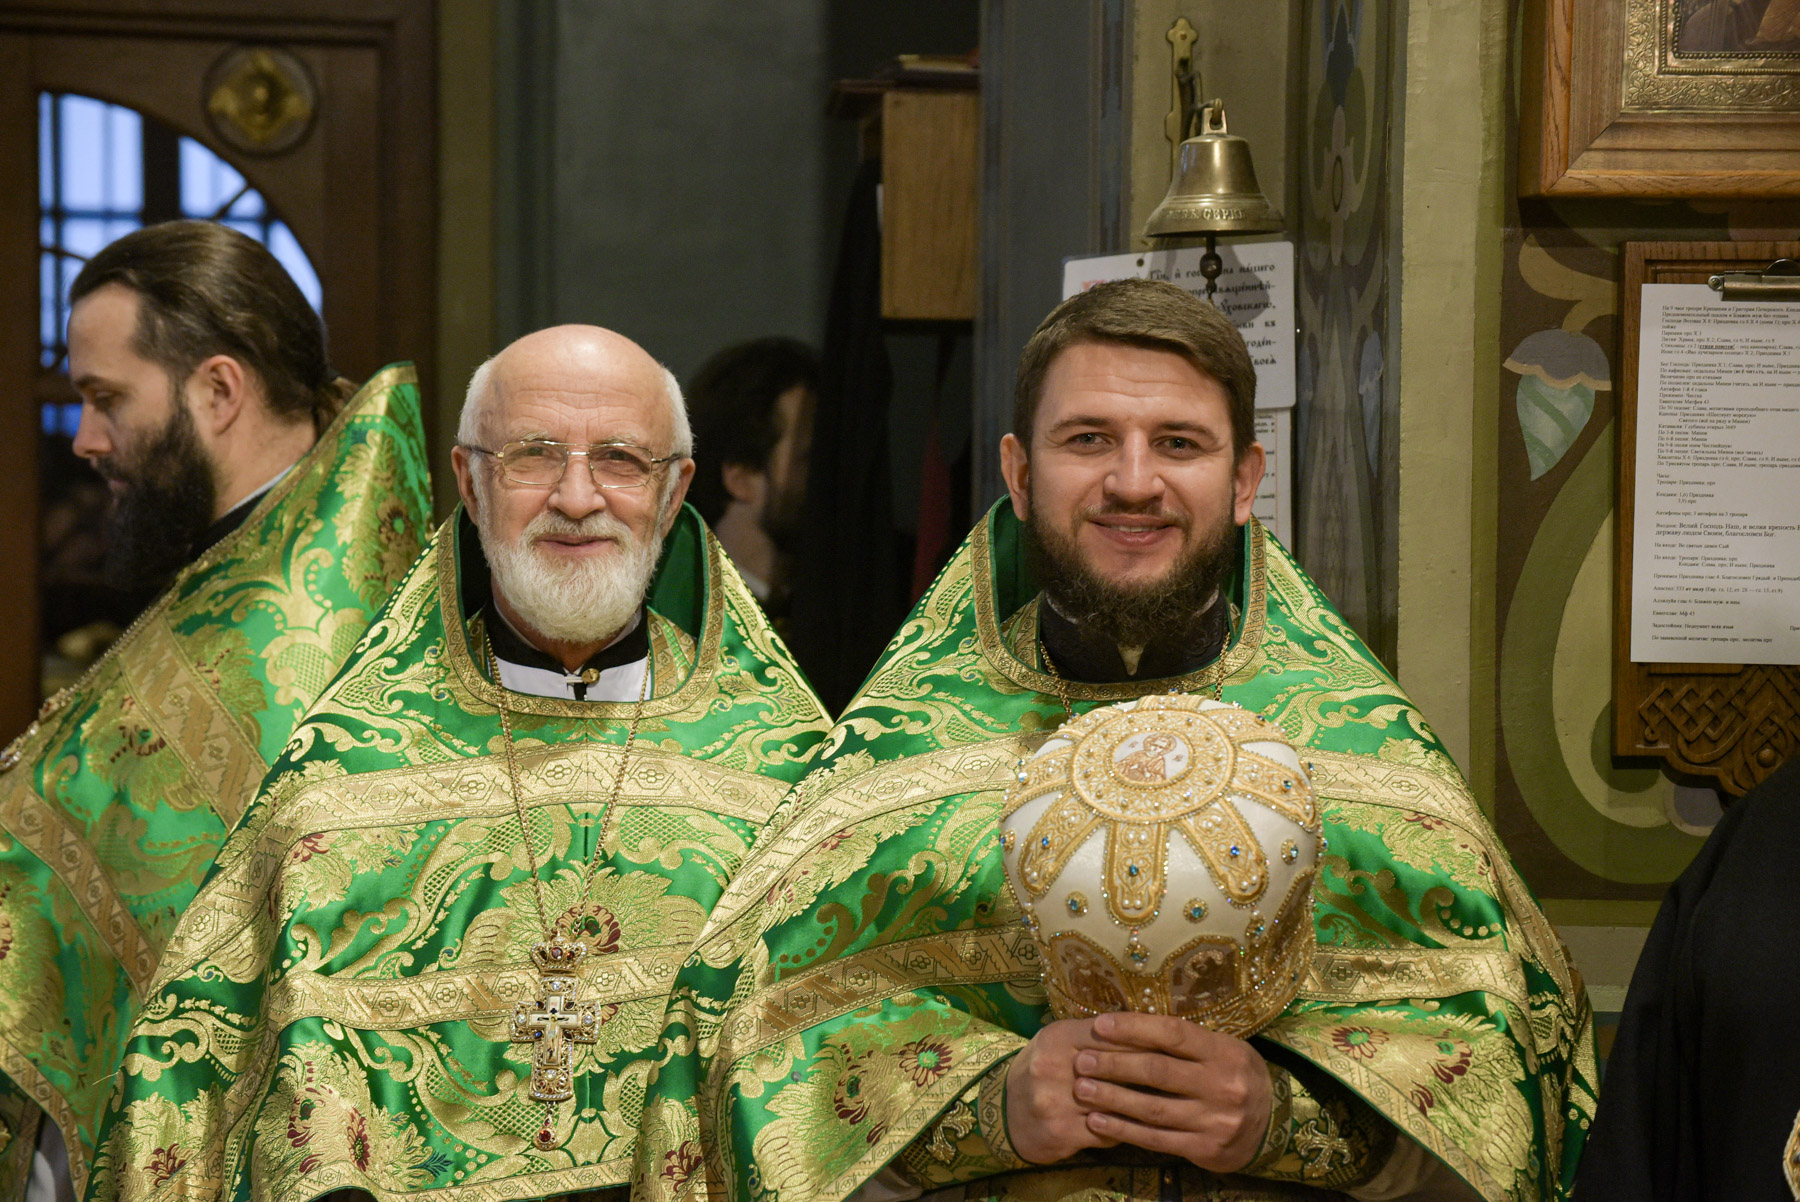 photos of orthodox christmas 0029 2